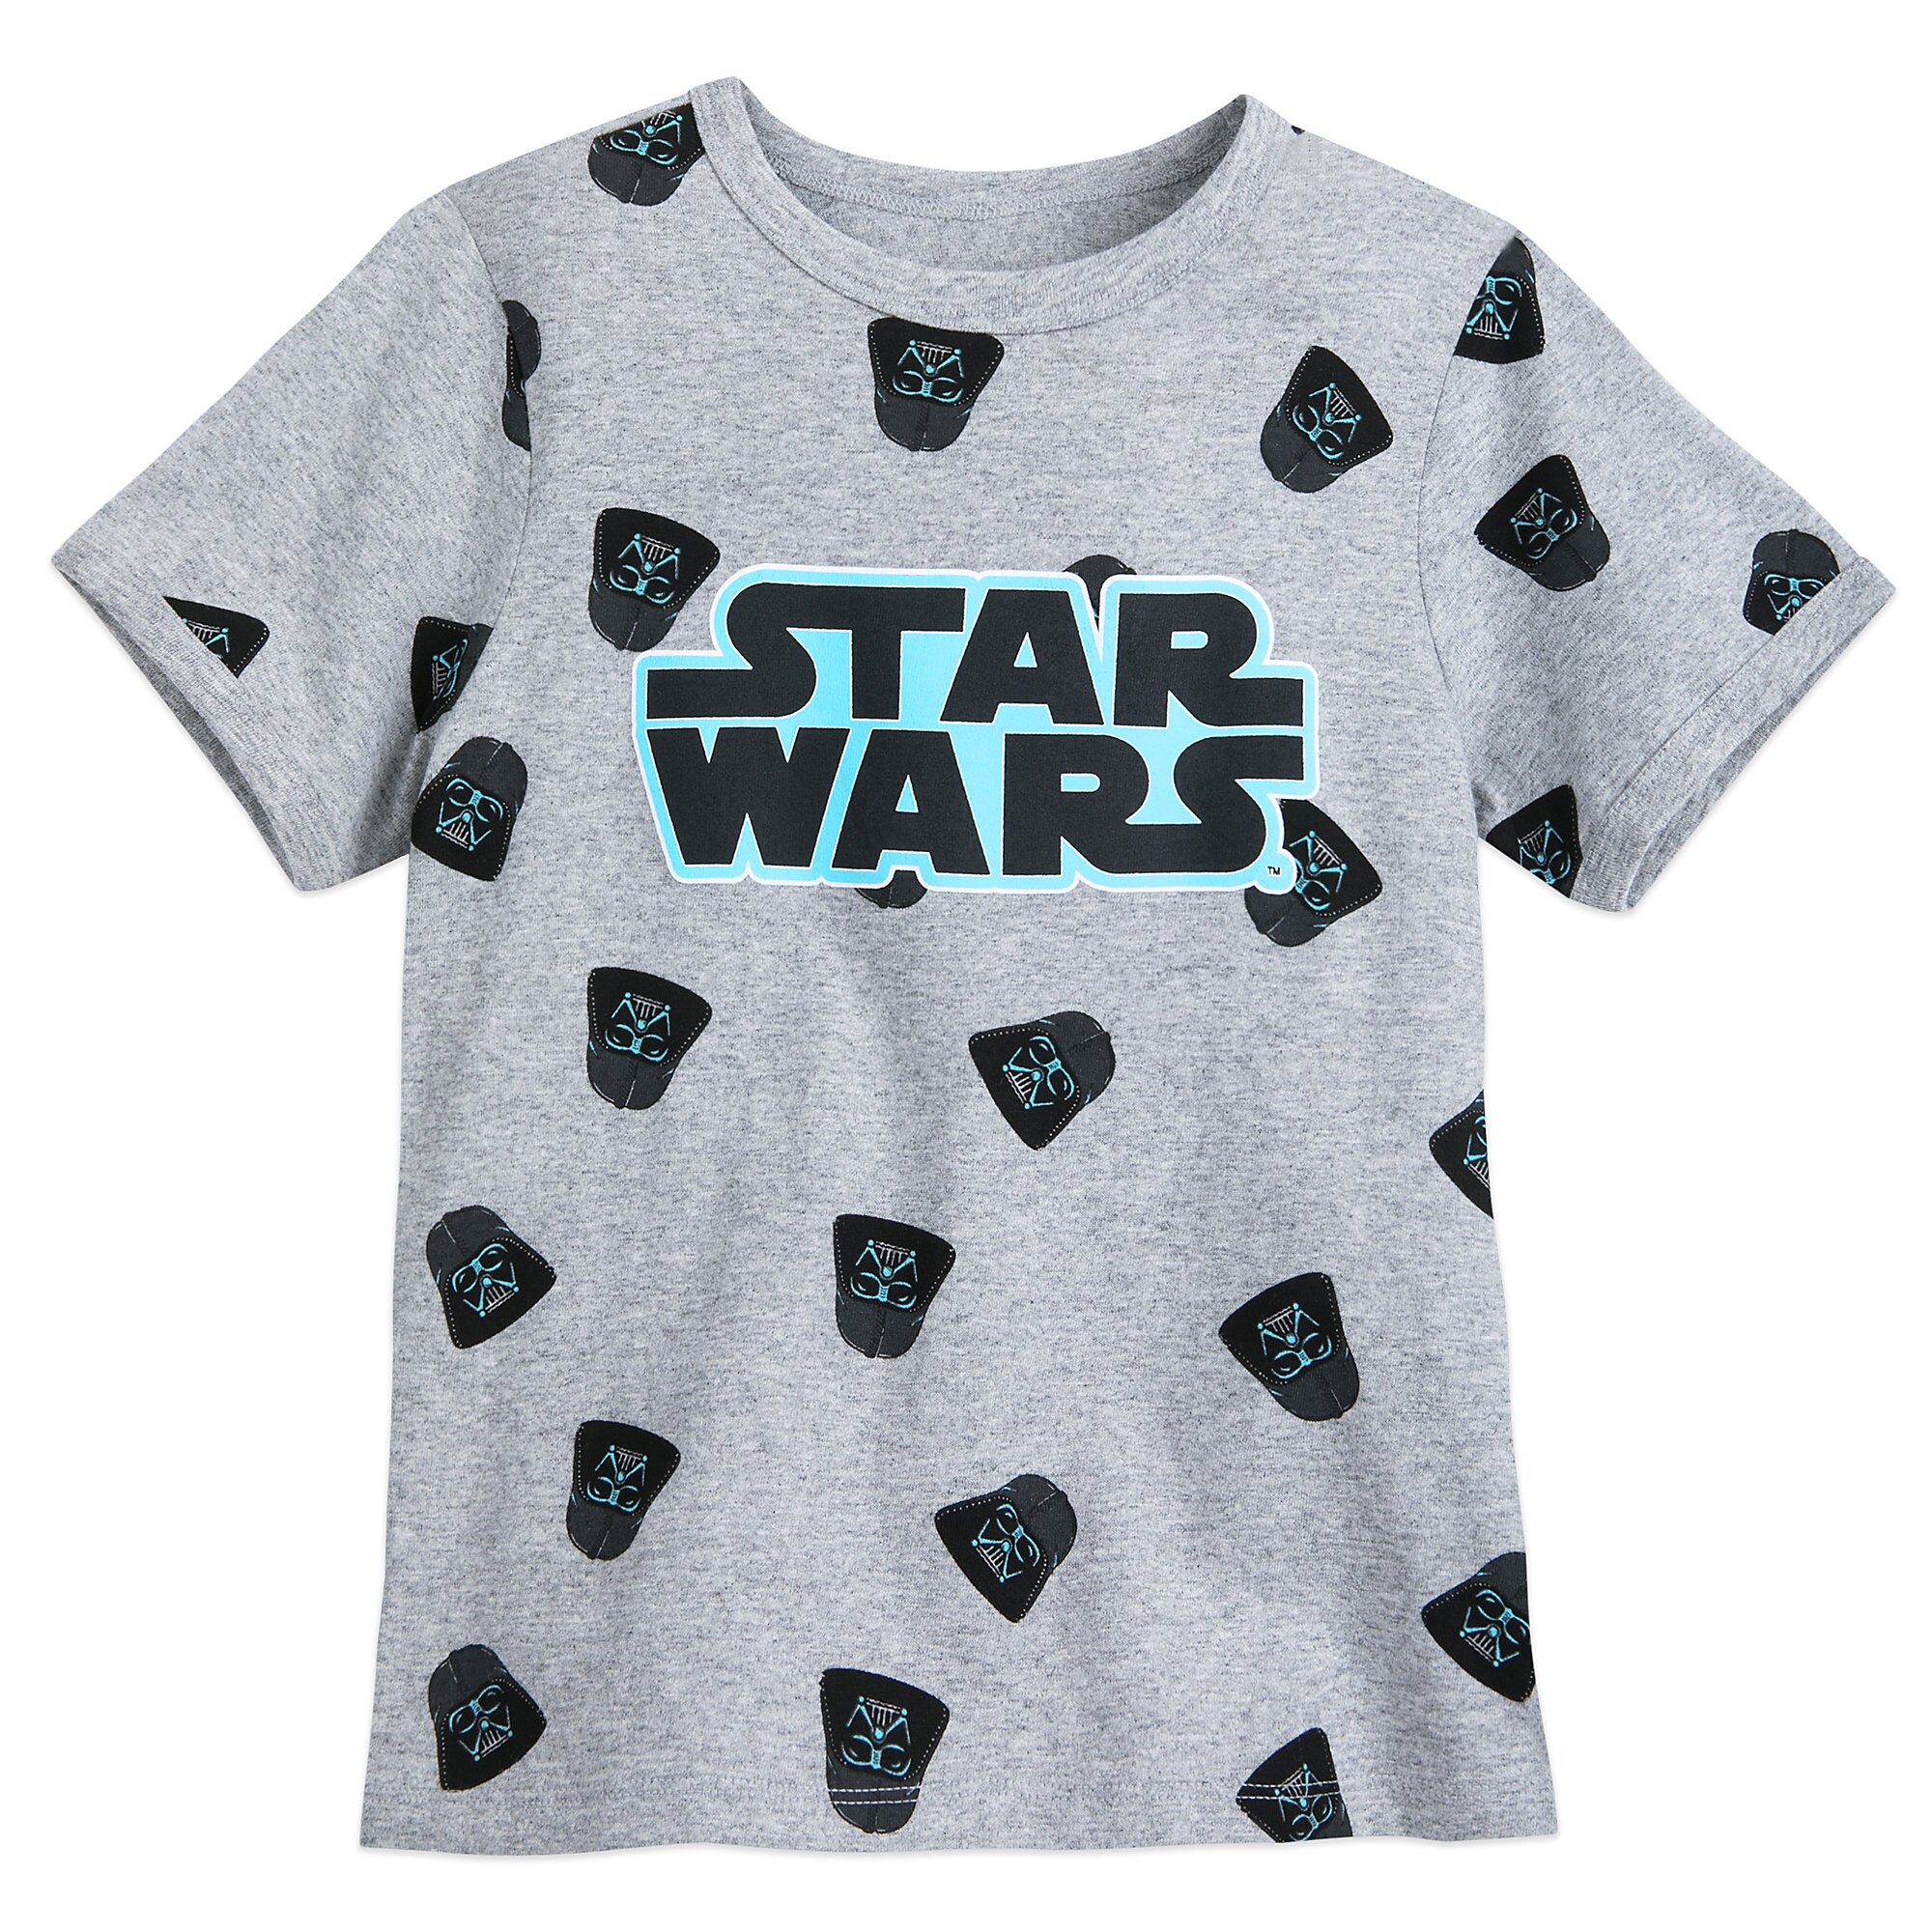 Star Wars Family T-Shirt for Boys